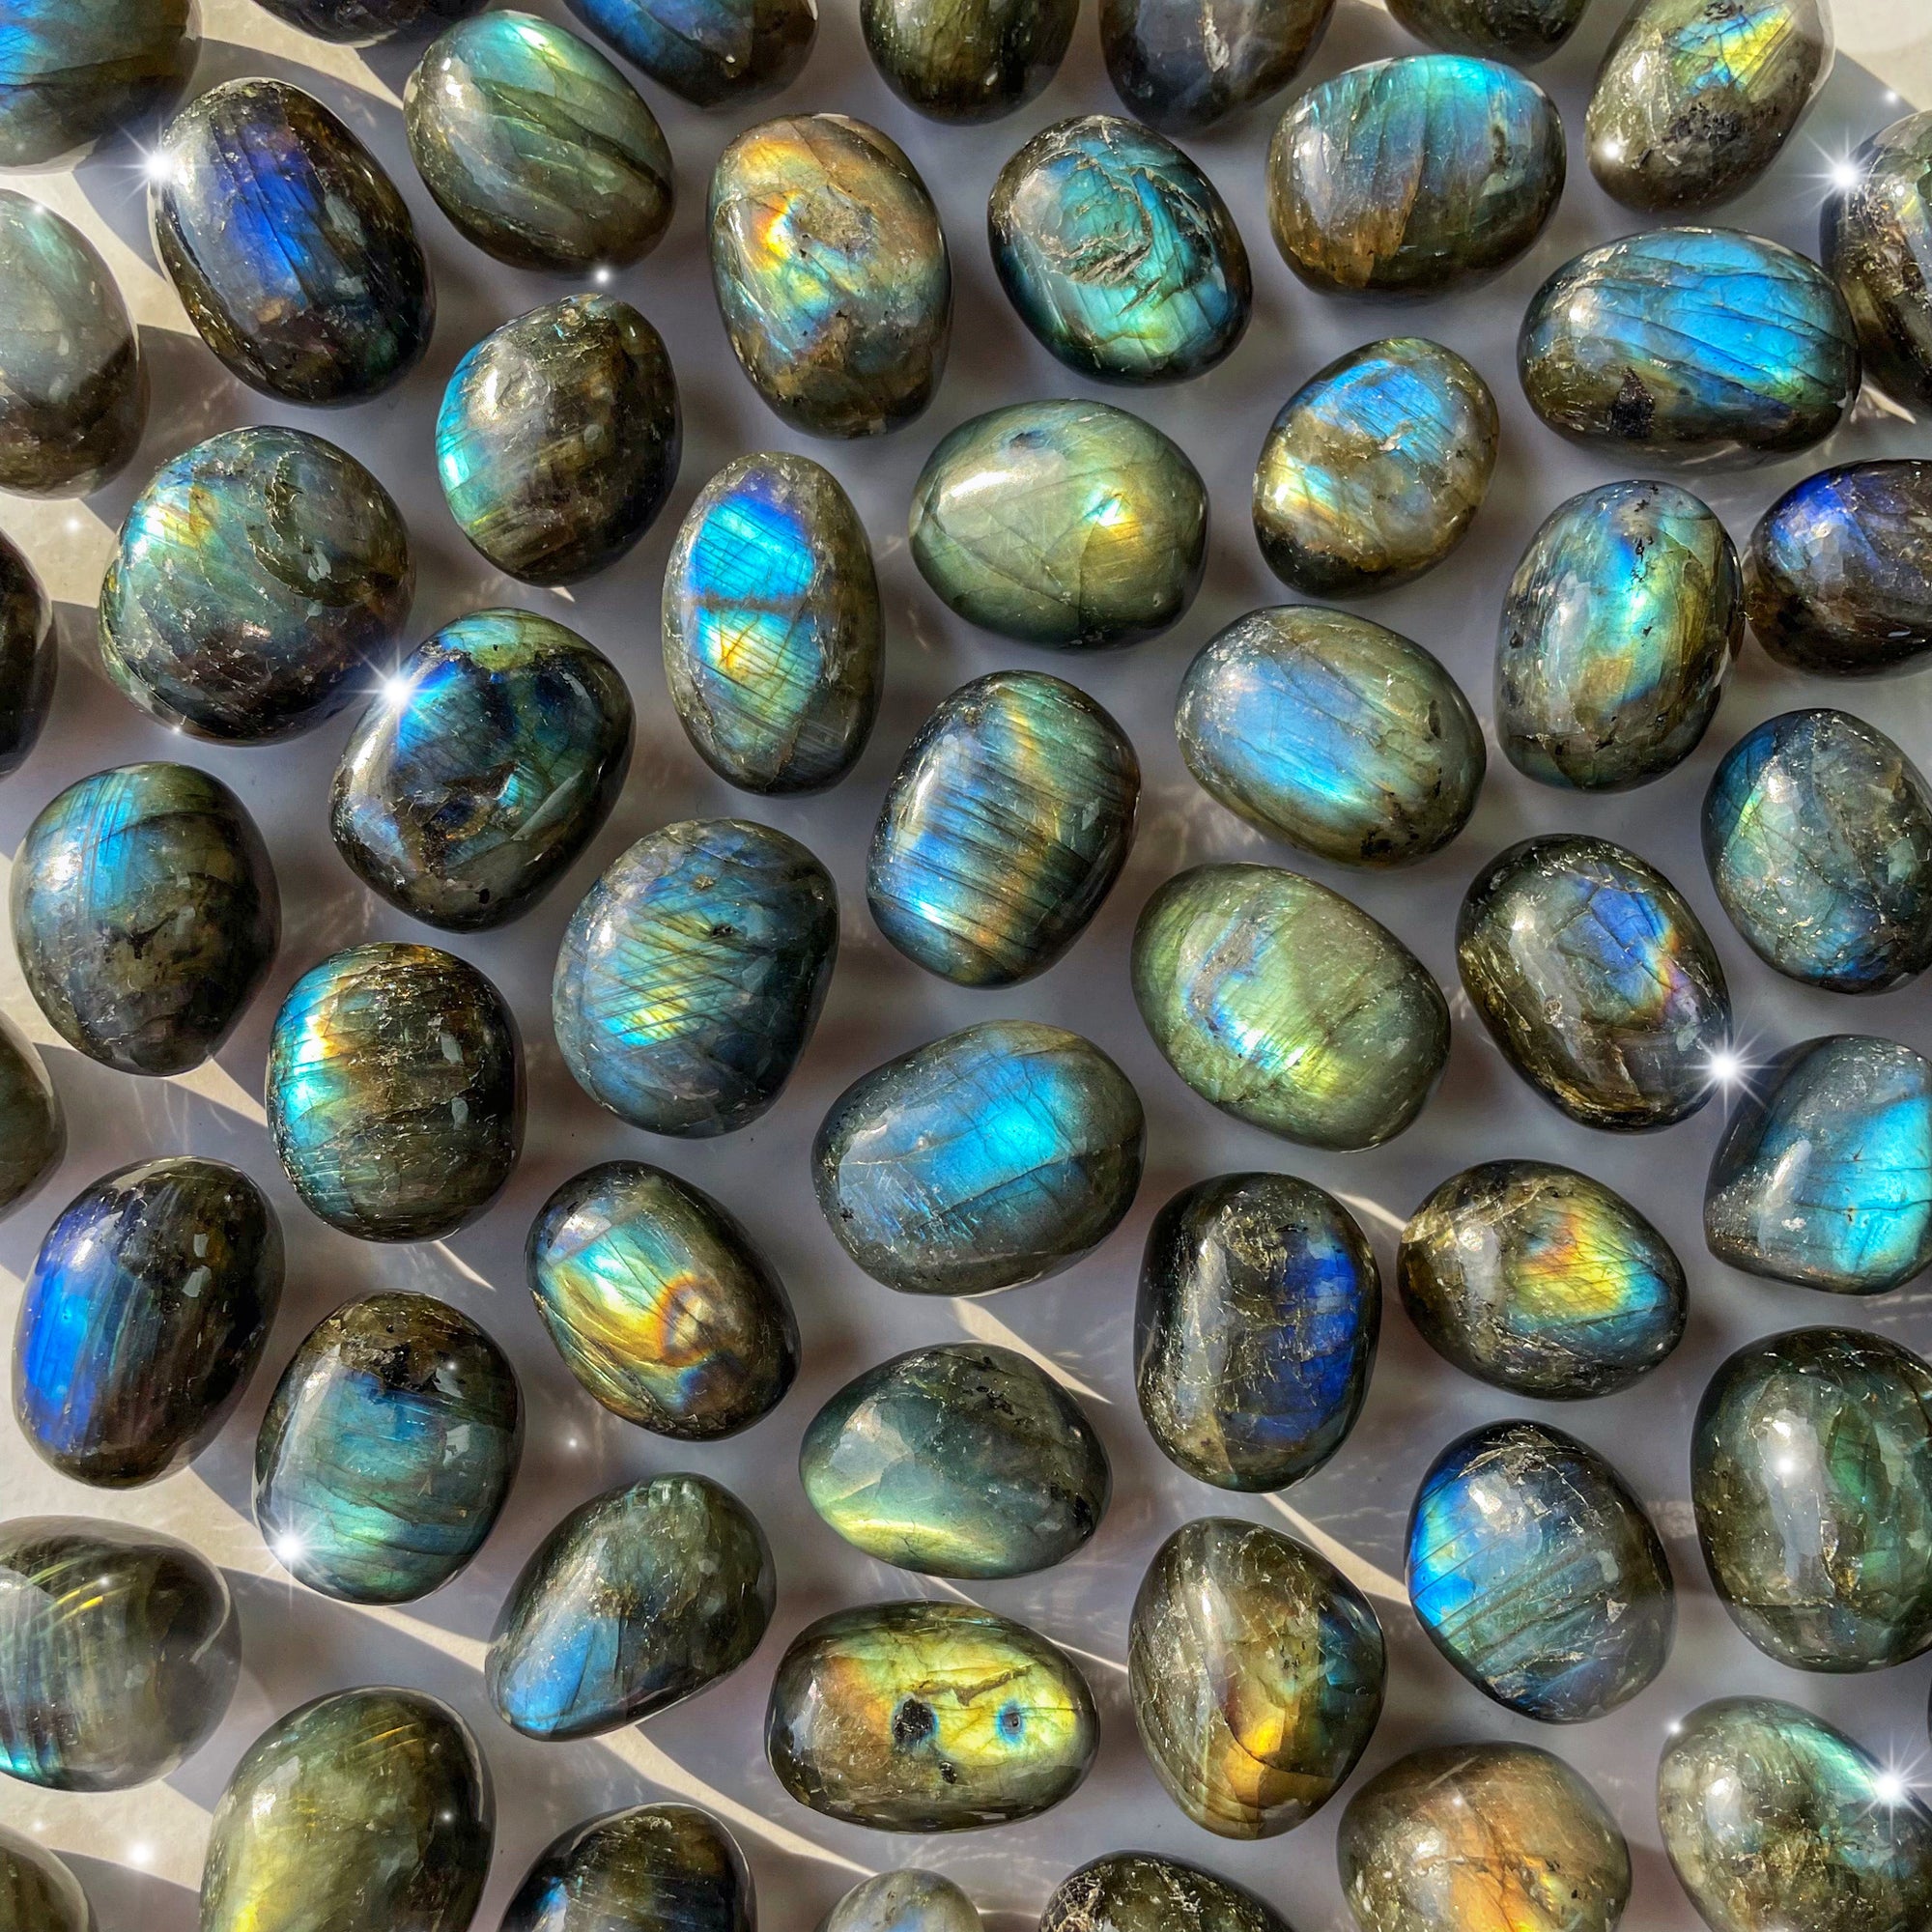 Labradorite Crystal Candles - Rocks with Sass